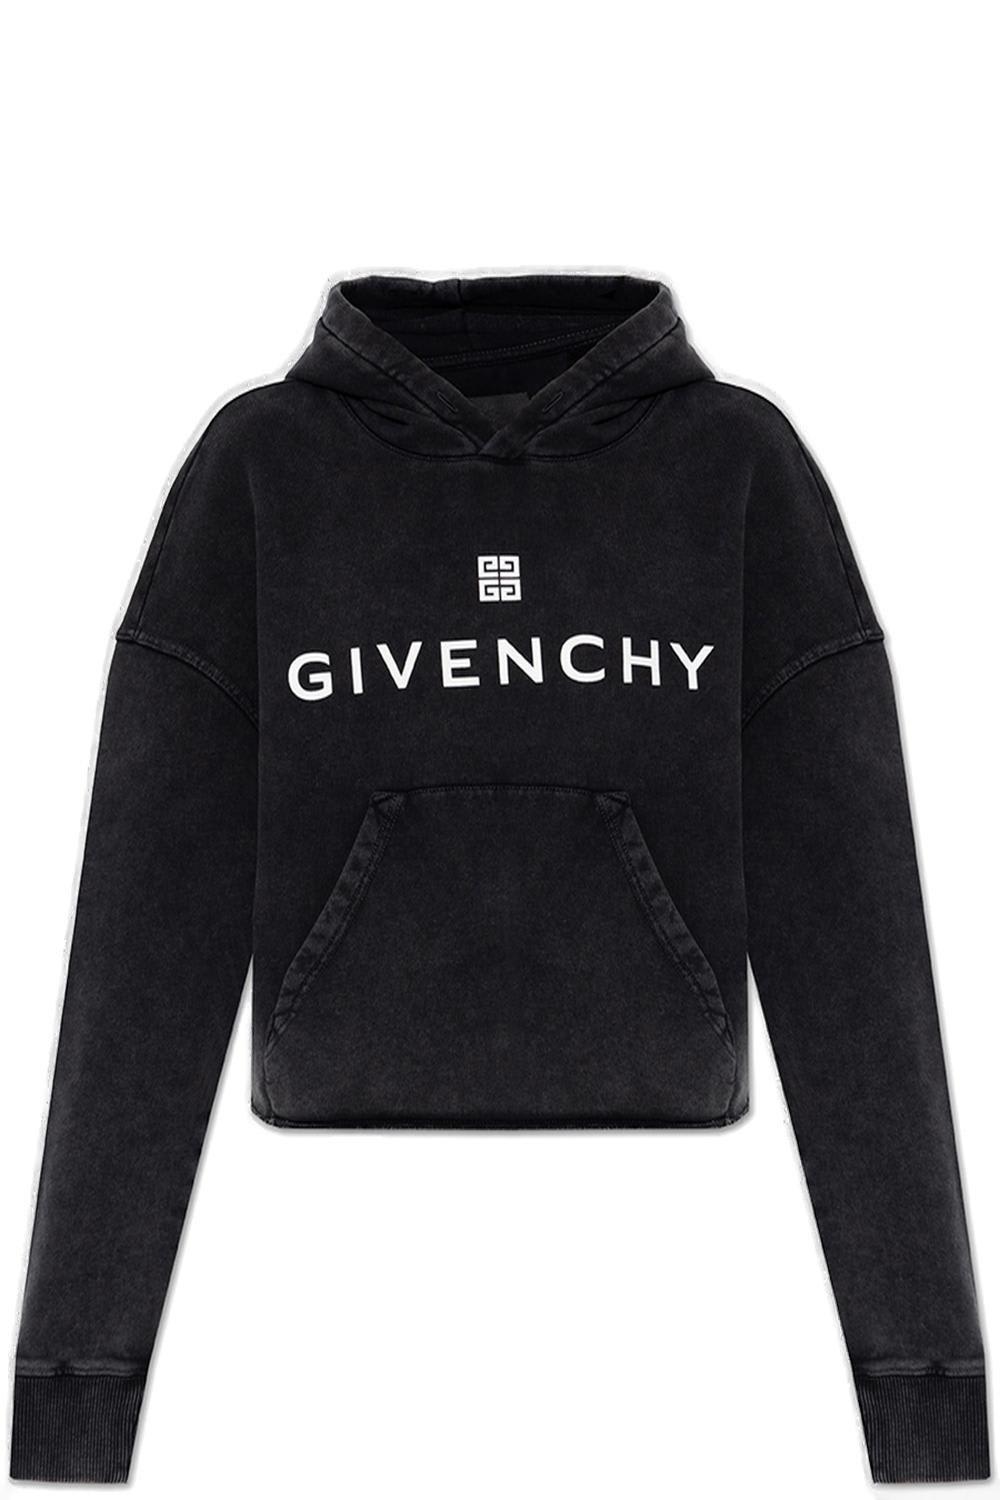 Givenchy Logo Printed Long-sleeved Hoodie